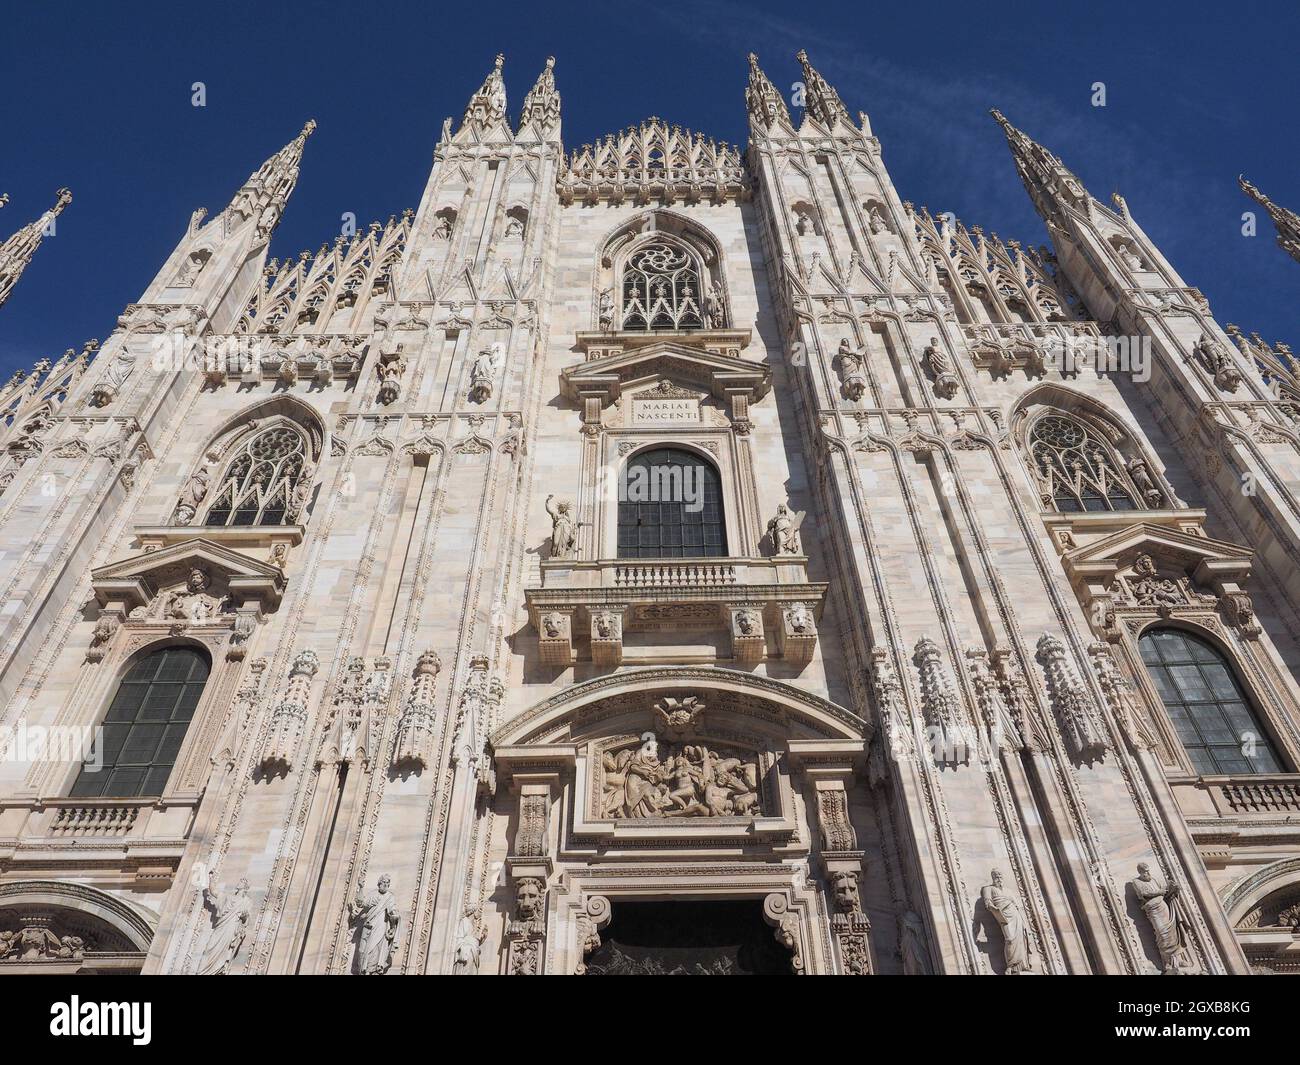 Duomo di Milano (translation Milan Cathedral) gothic church in Milan, Italy. Stock Photo